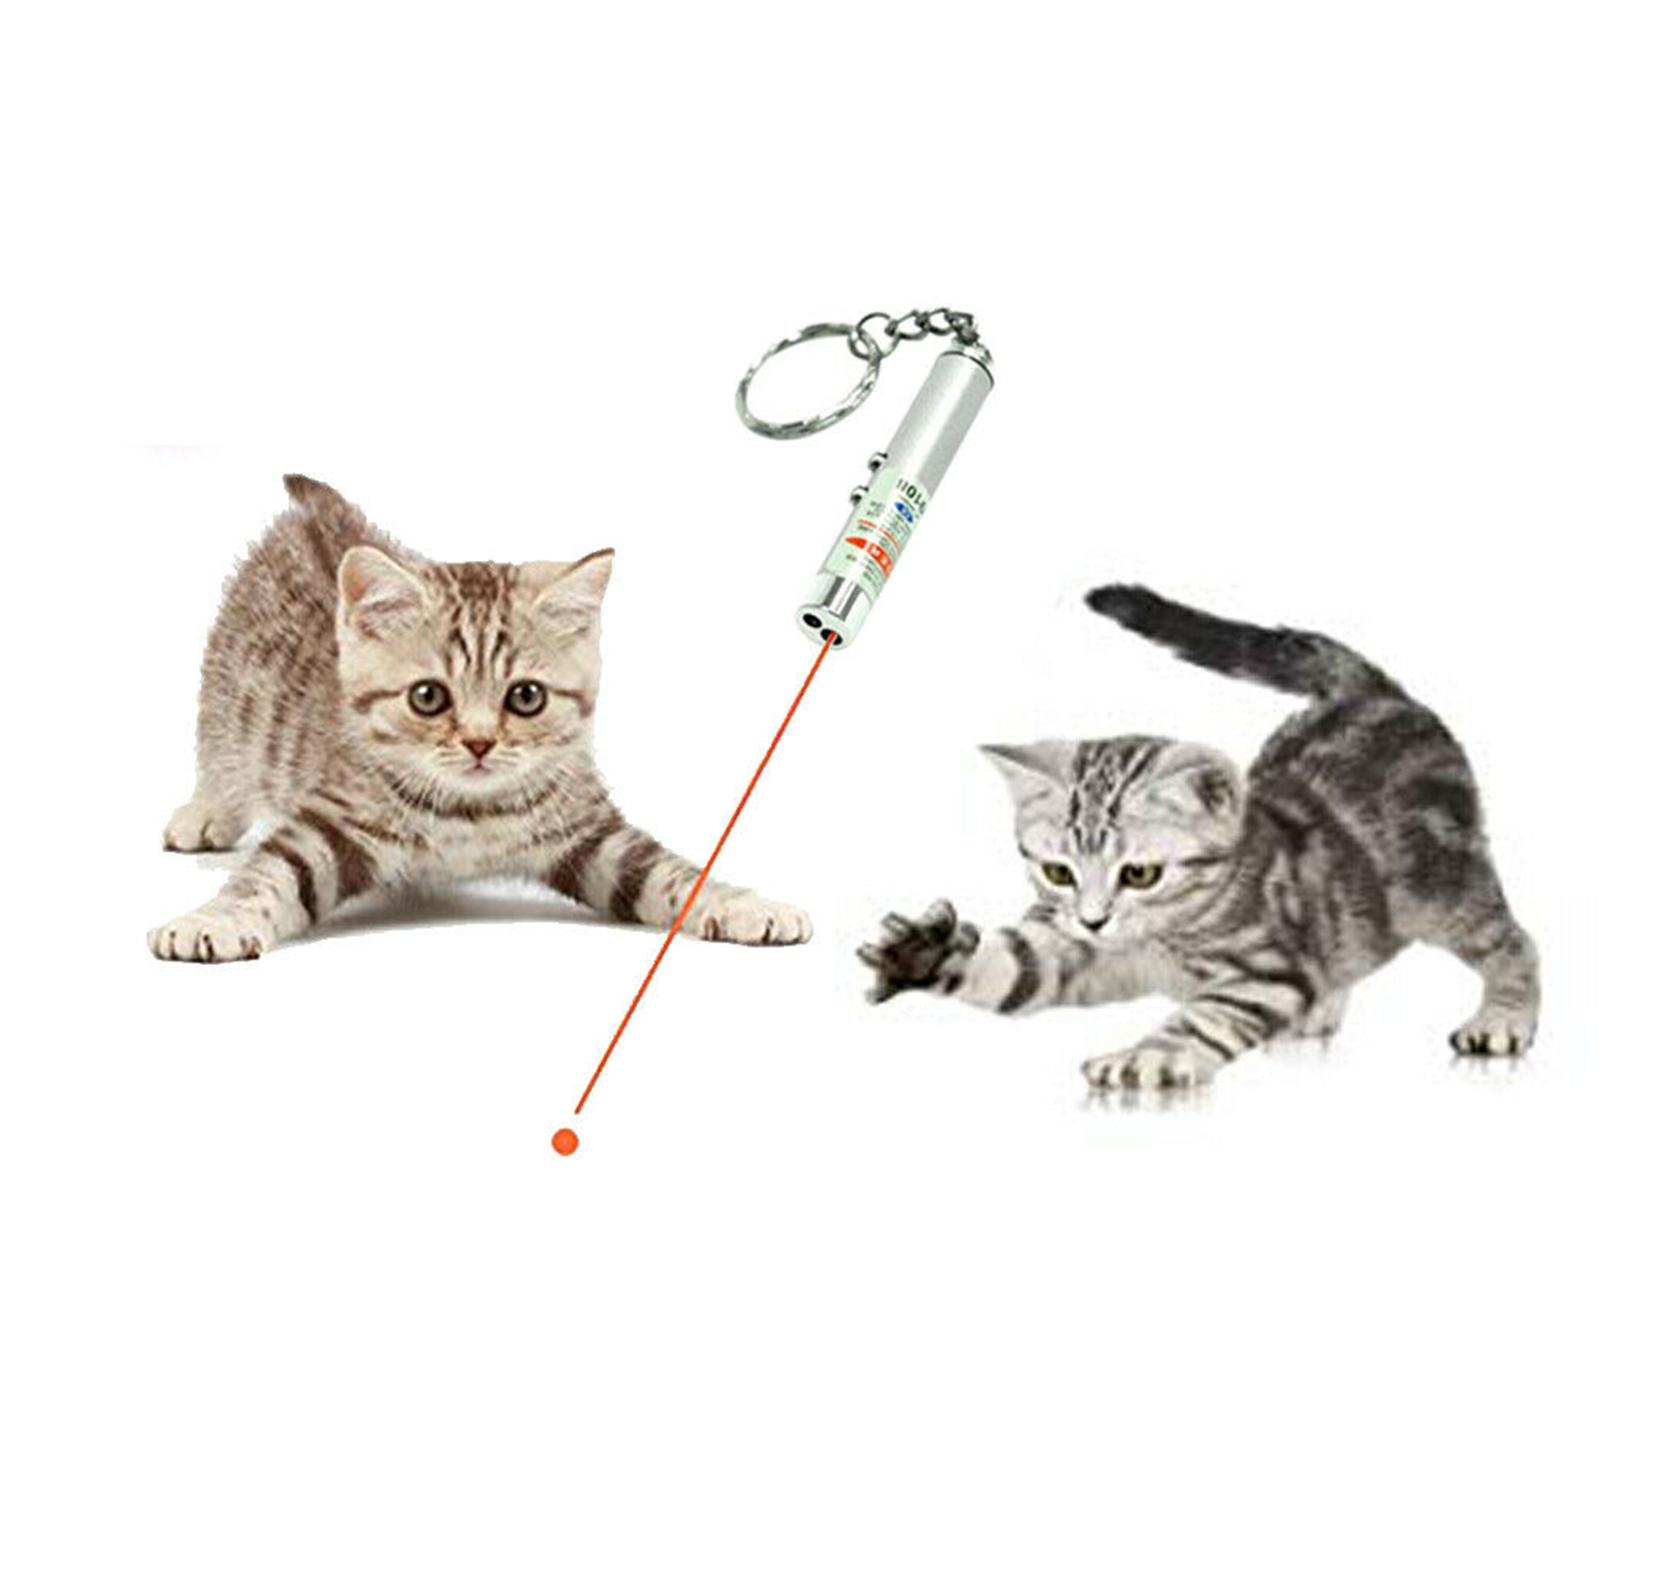 Laser Pen & Torch Cat Toy